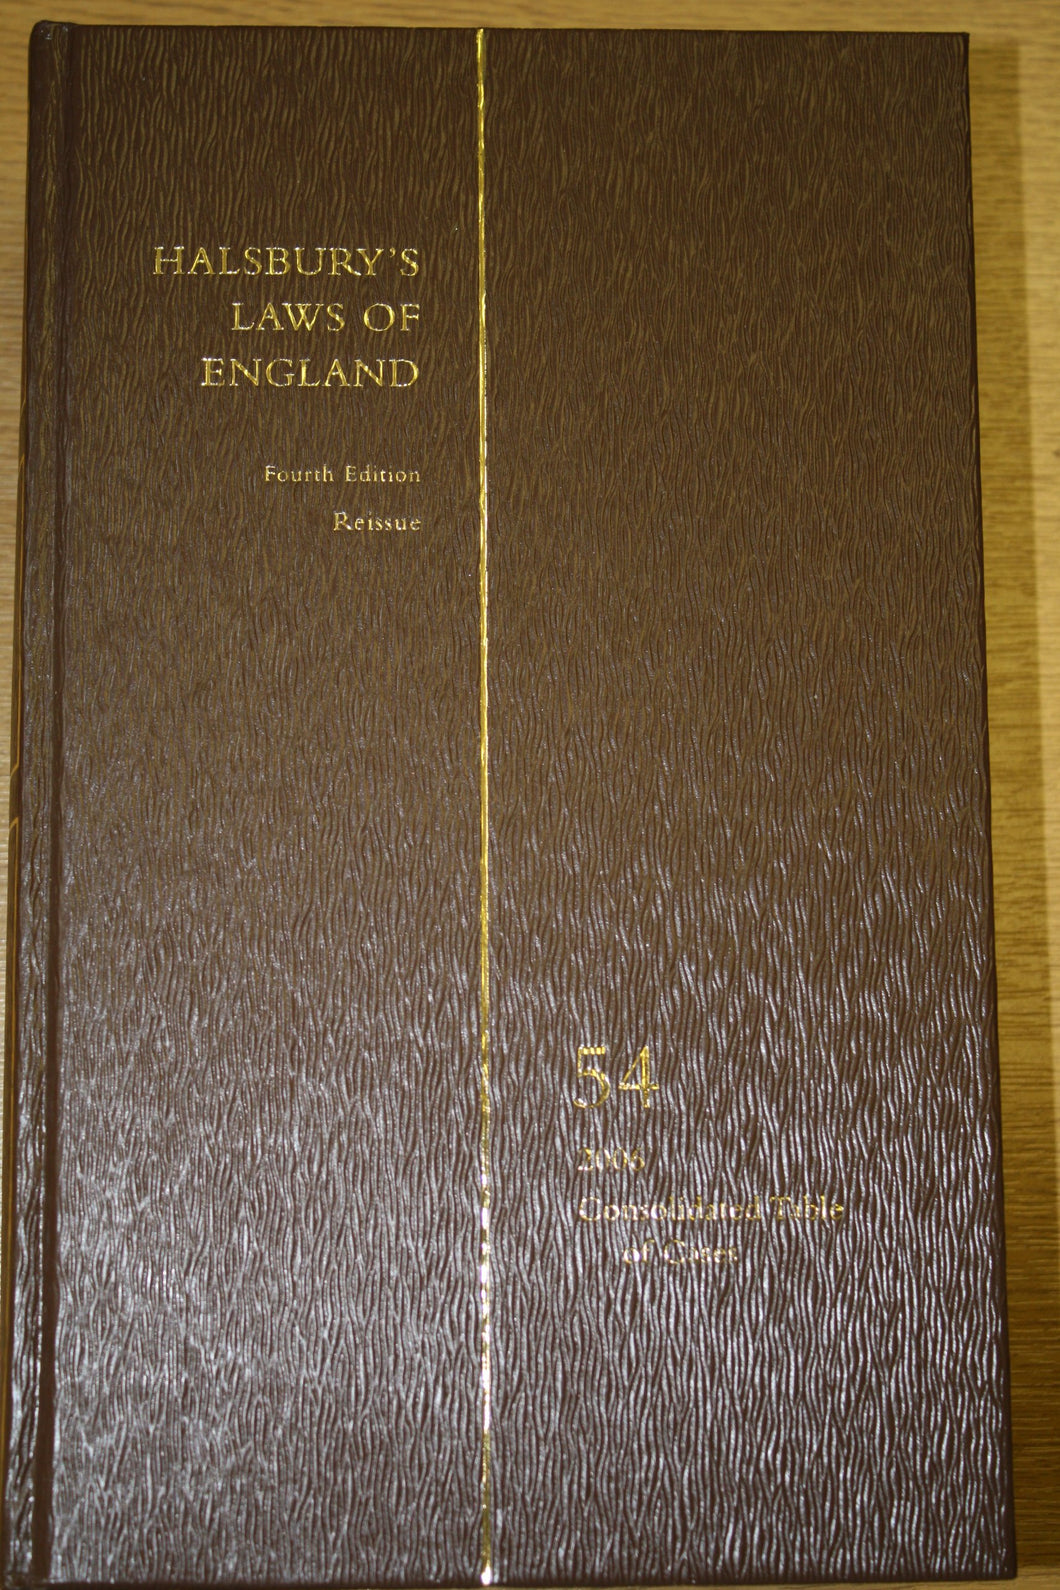 HALSBURY'S LAWS OF ENGLAND VOLUME 54